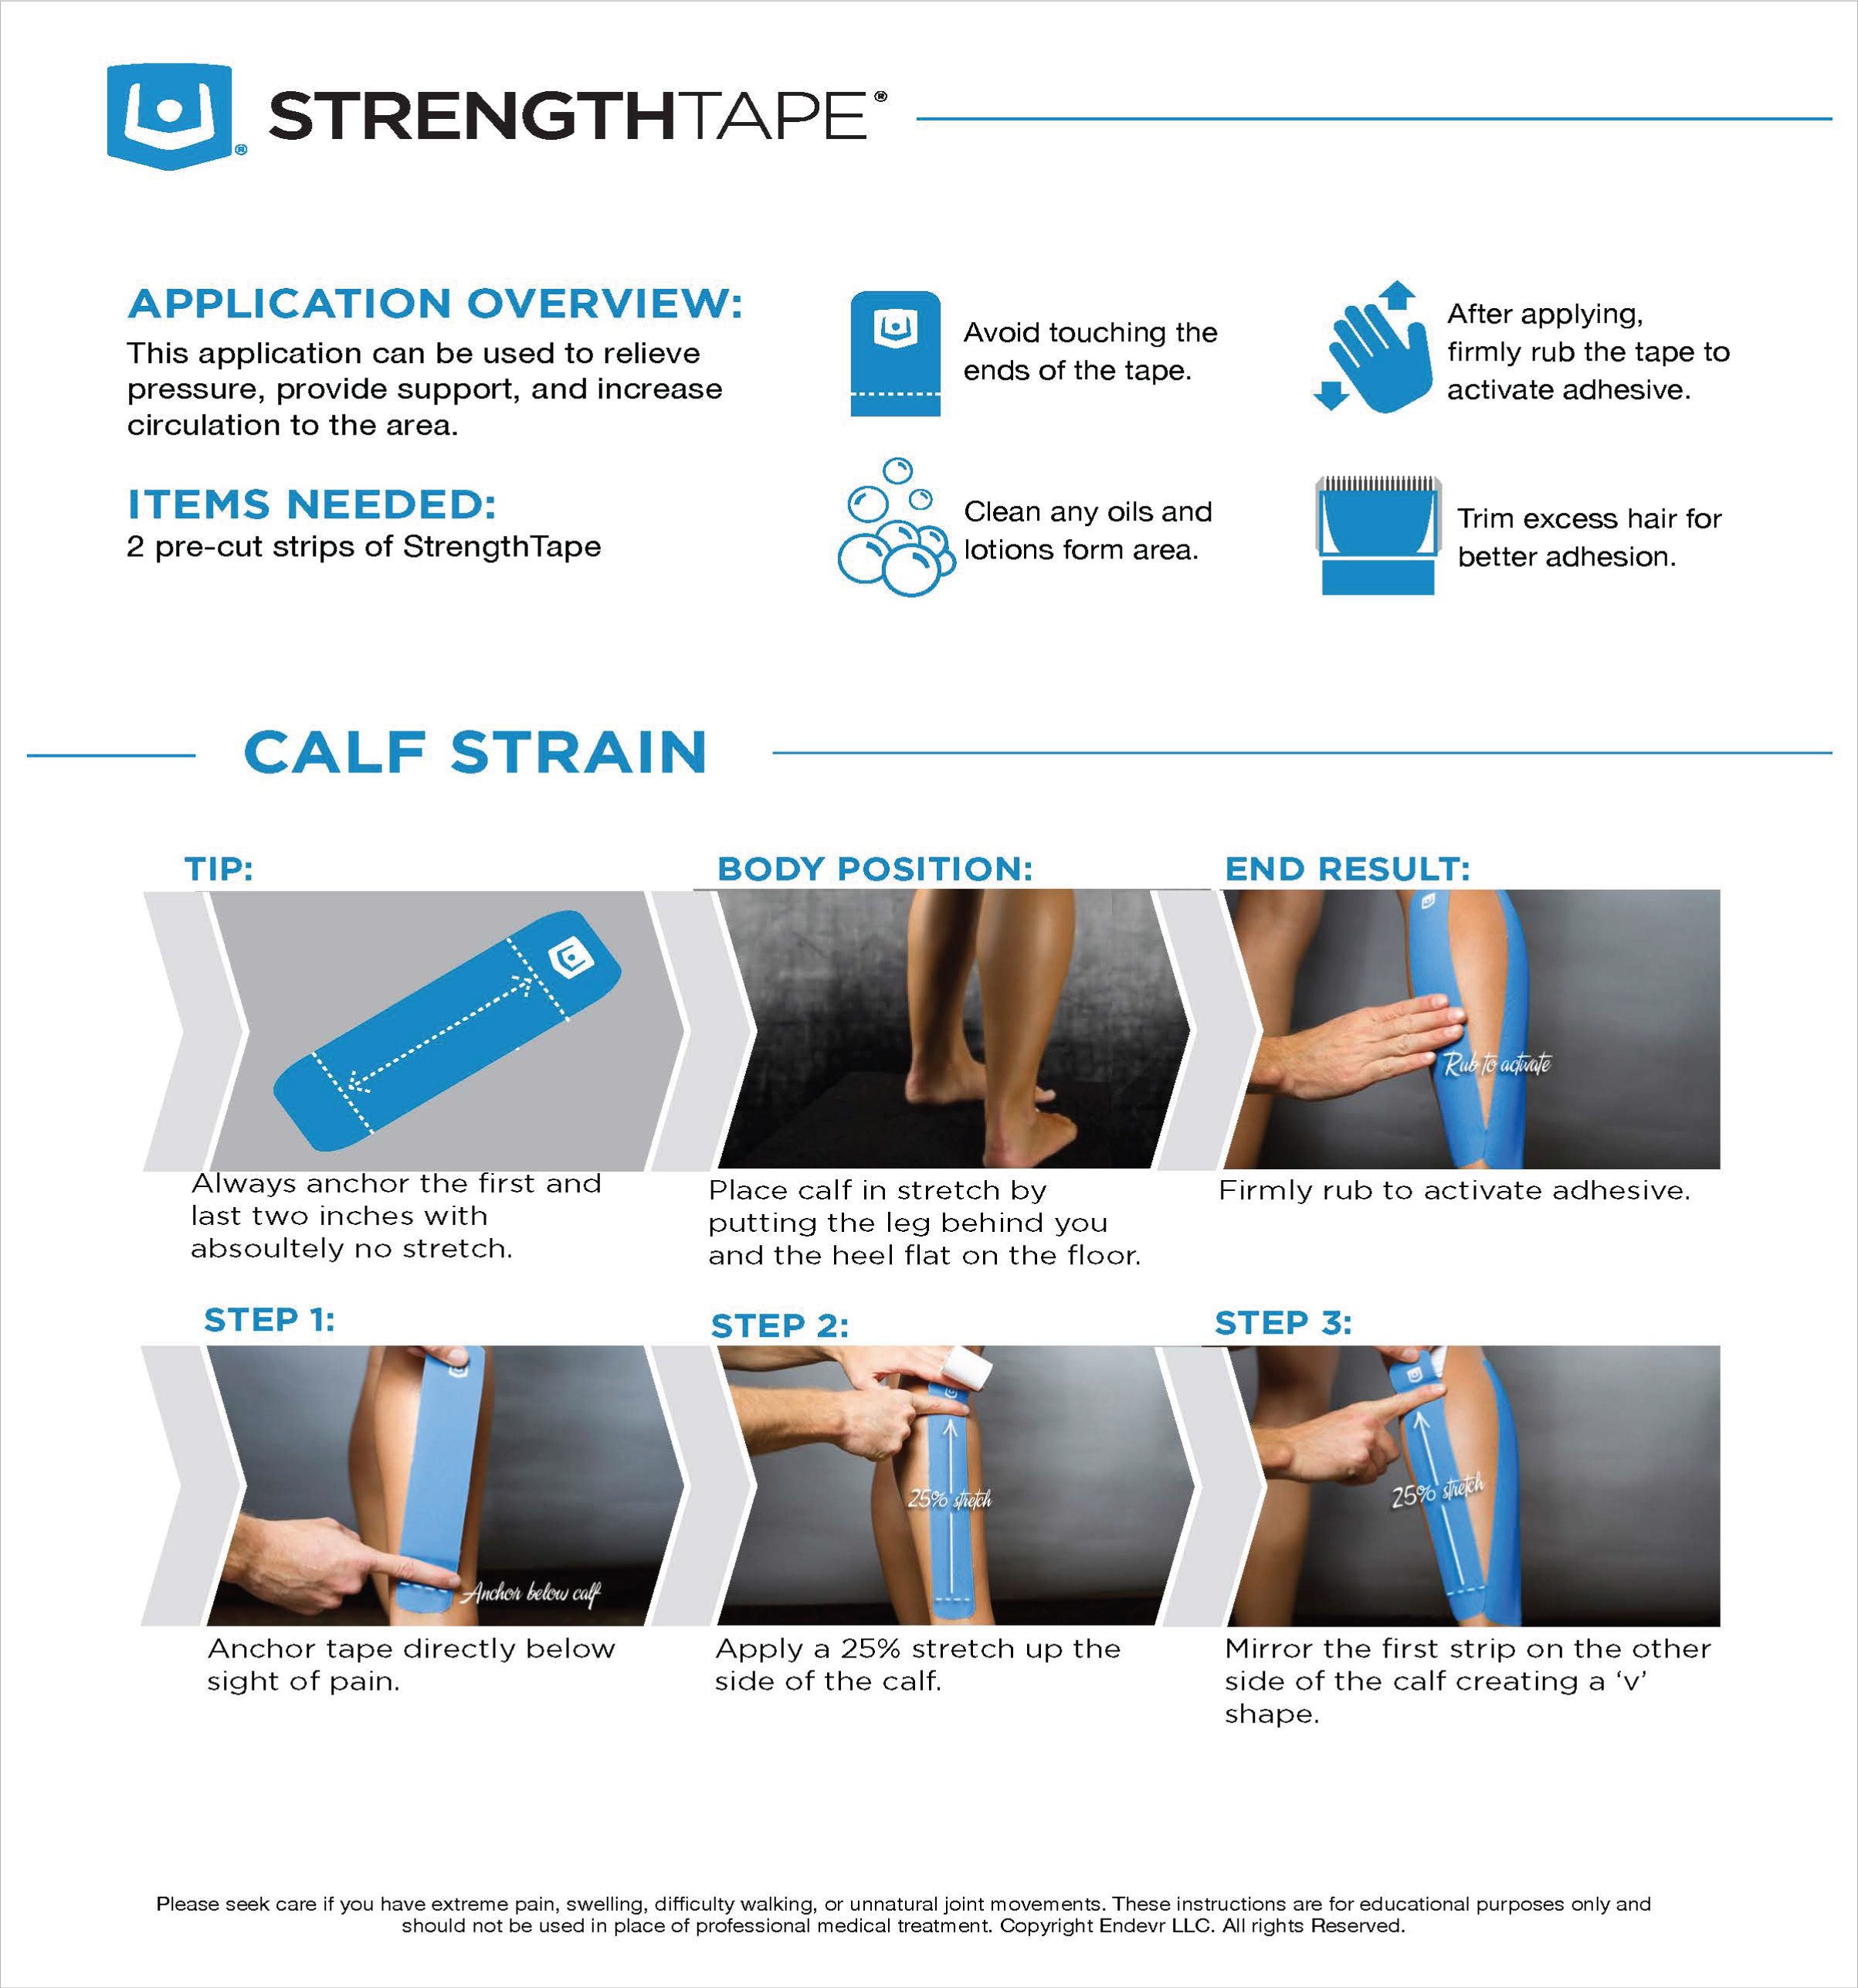 StrengthTape Calf Strain Taping Instructions